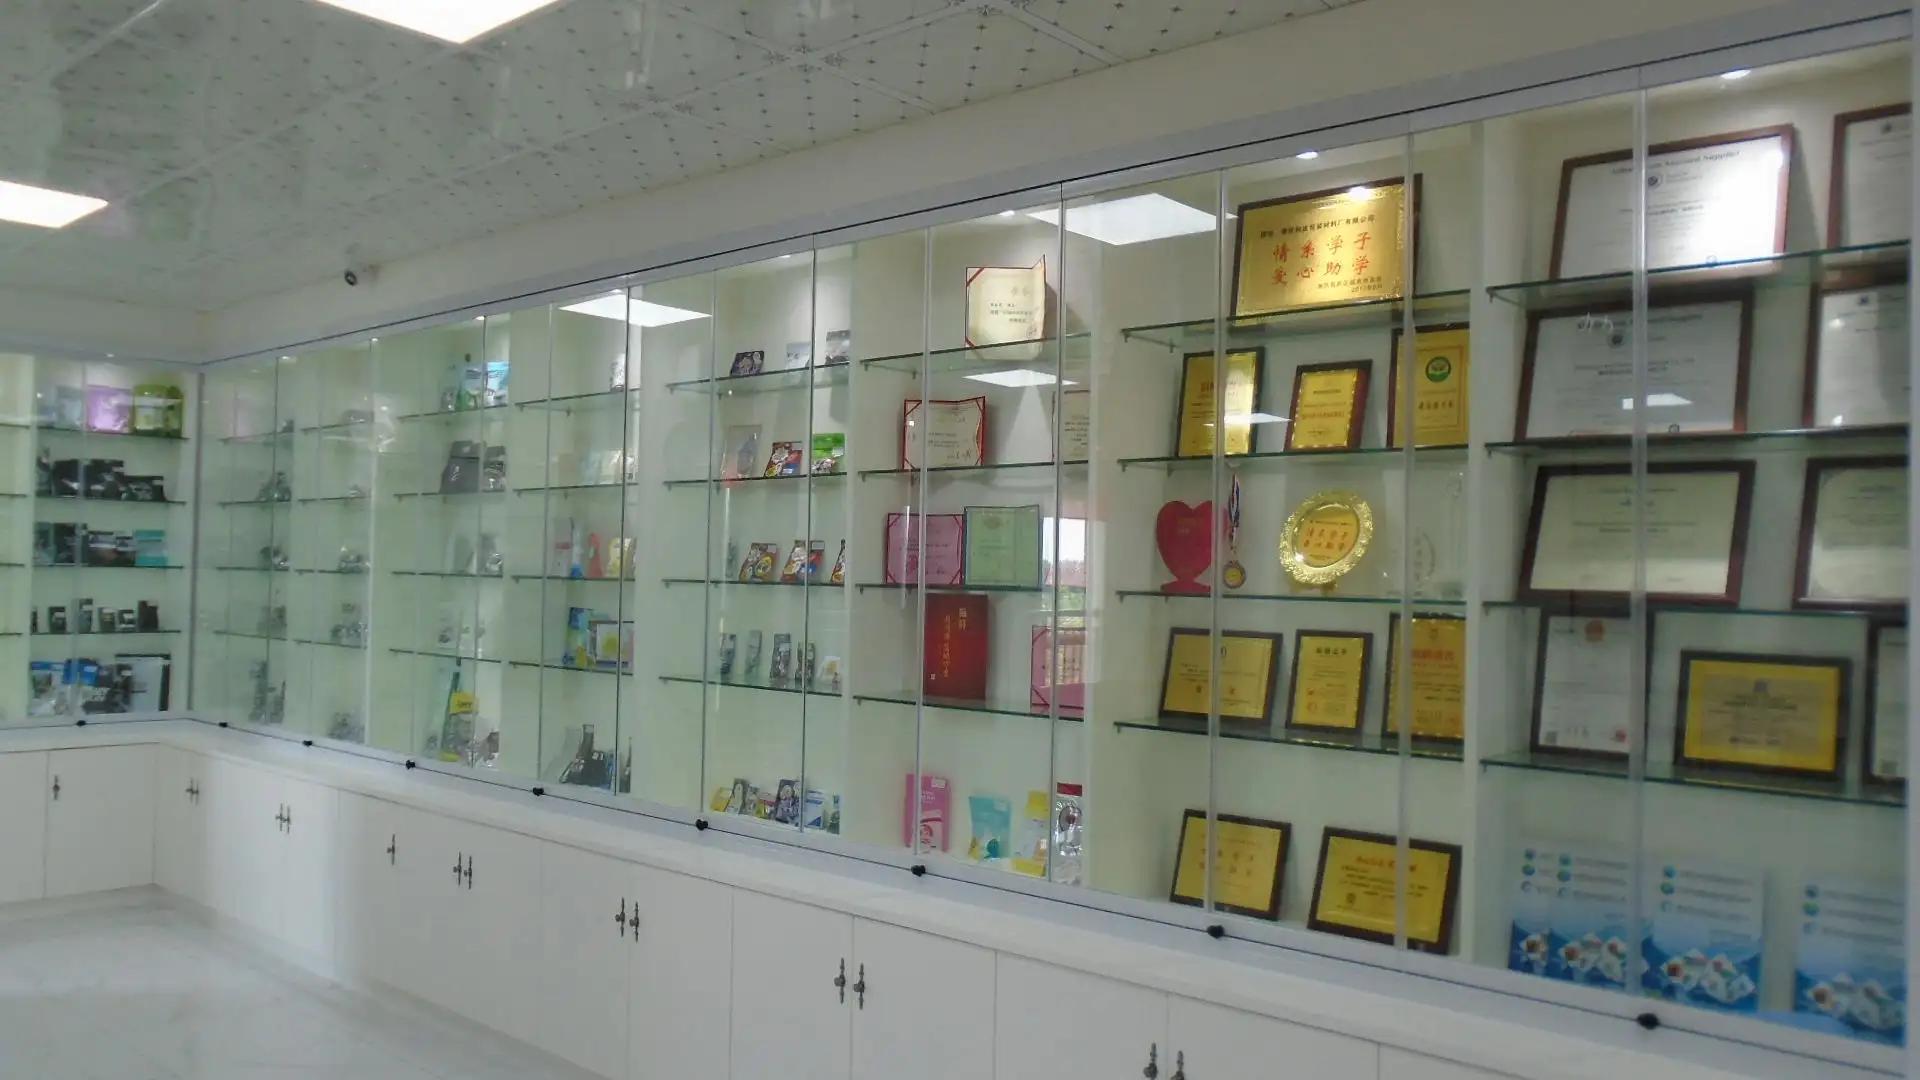 Zhaoqing Litat Packaging Material Co., Ltd.